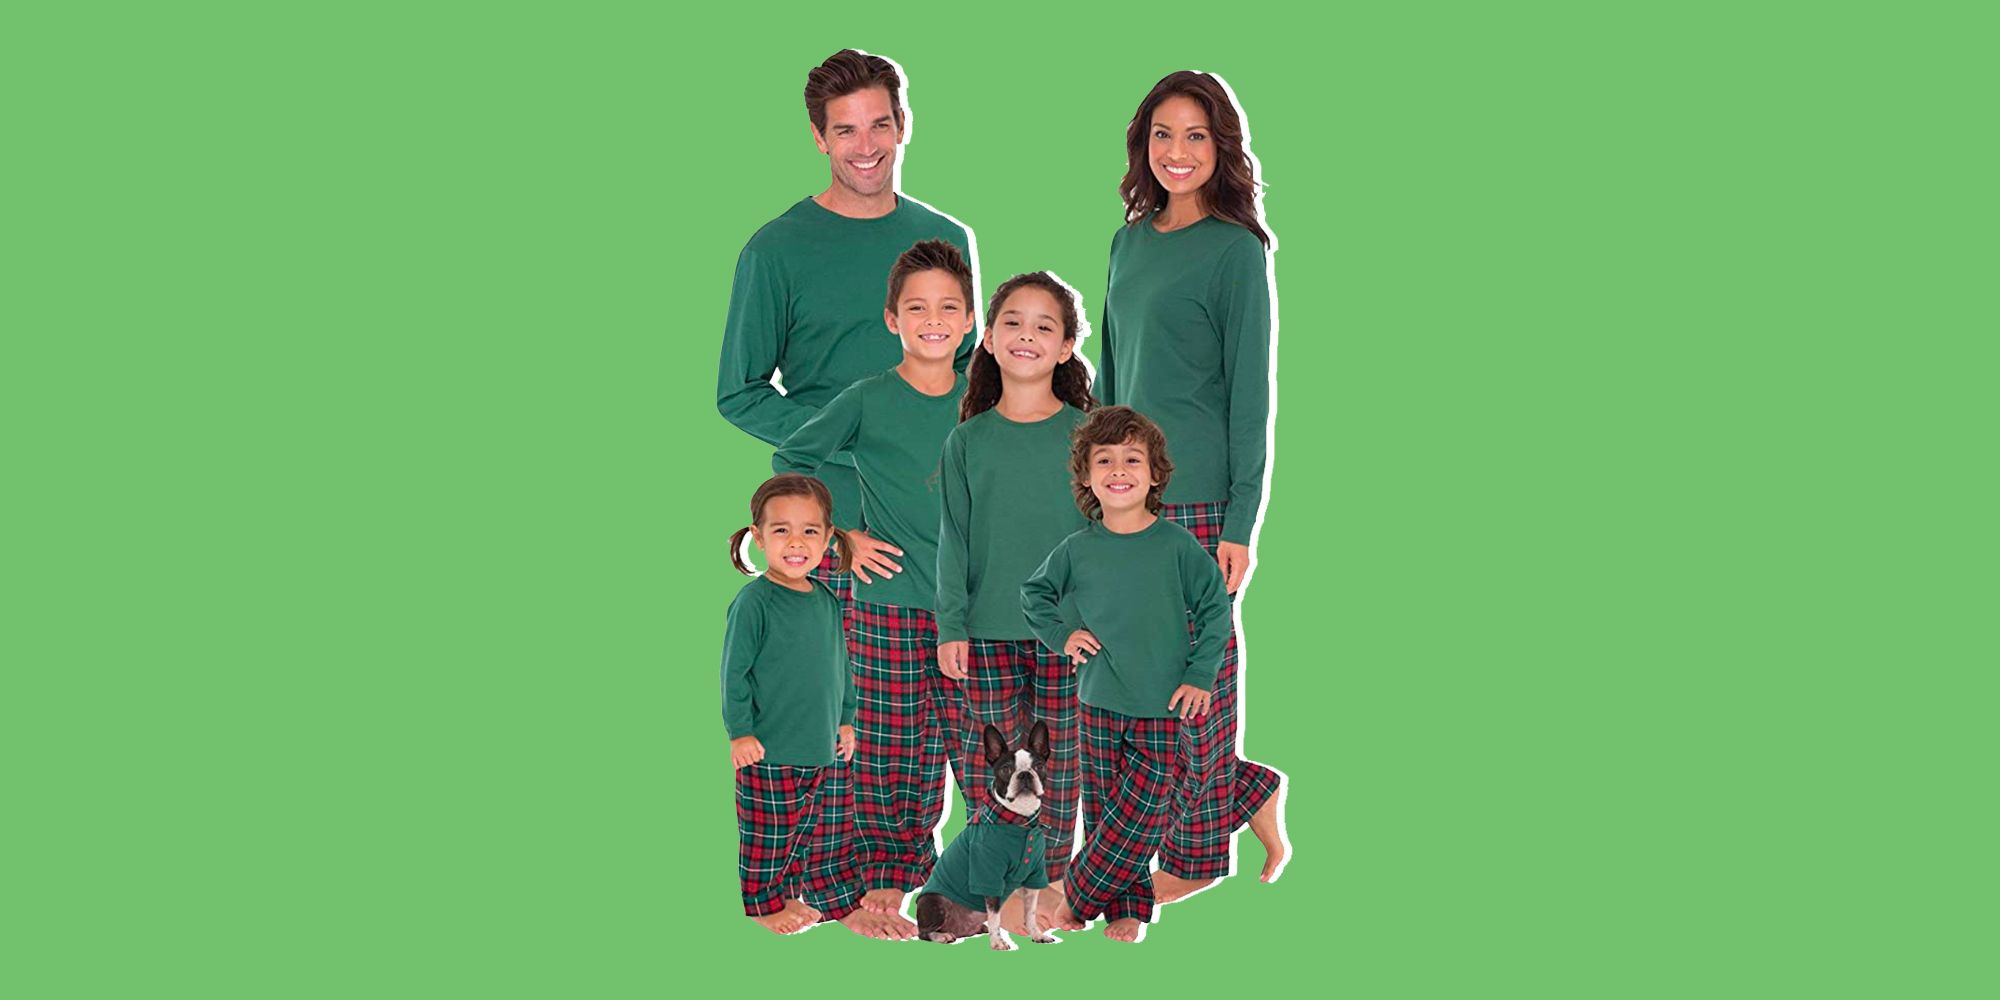 Yaffi Family Matching Pajamas Christmas Festival Footed Pyjamas Hoodie Jumpsuit Onesie for Mom Dad Kids Fleece Snowflake Sleeper PJs